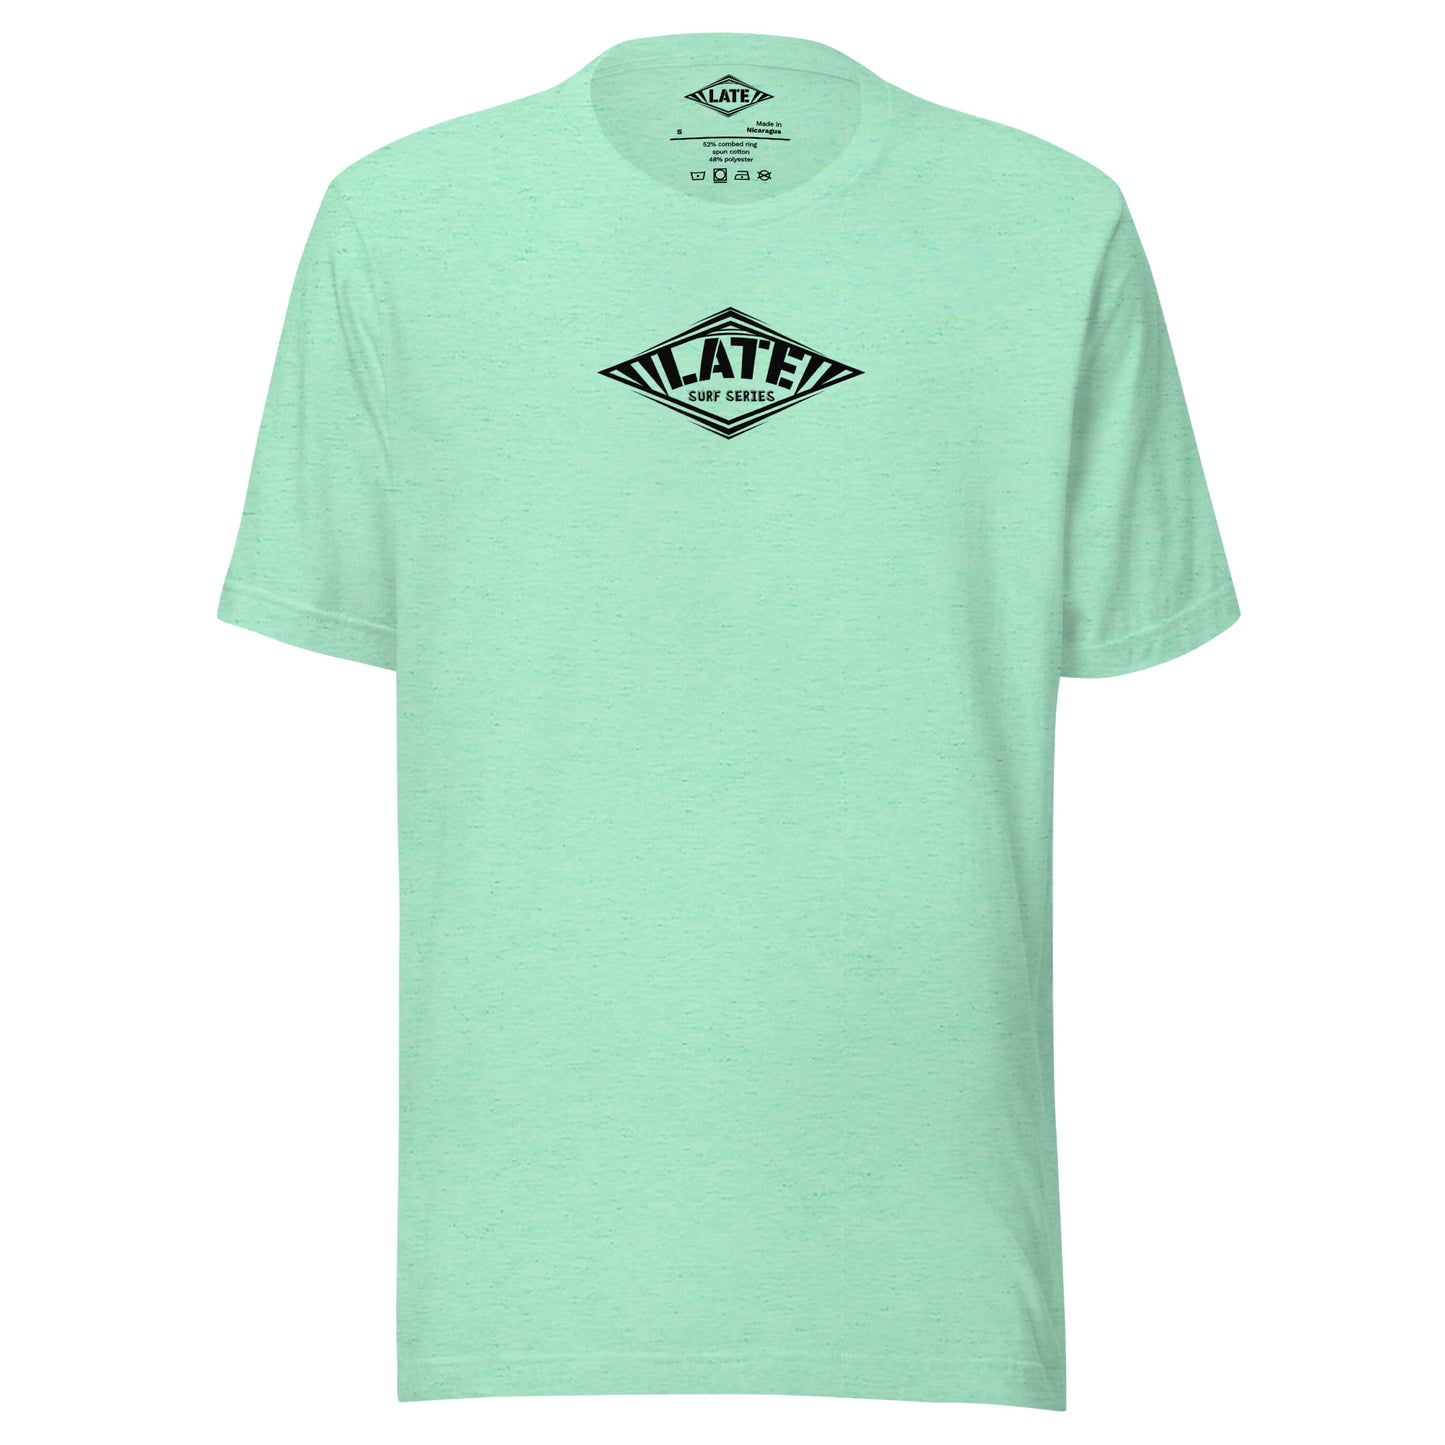 T-Shirt Take On The Elements style hurley texte surf series, et logo Late tshirt de face couleur vert pastel